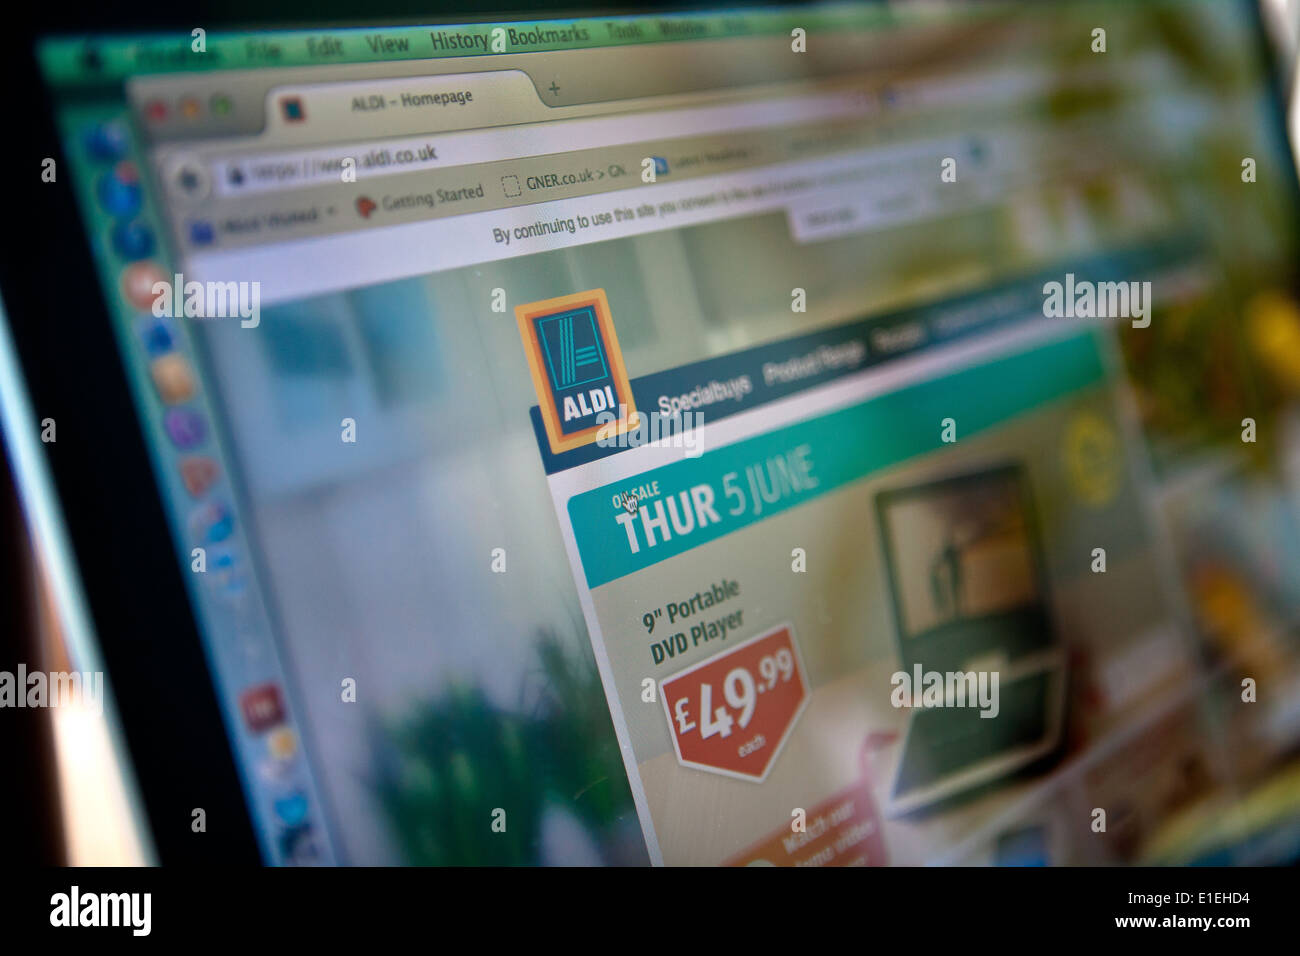 Laptop computer screen showing website of ALDI supermarket Stock Photo